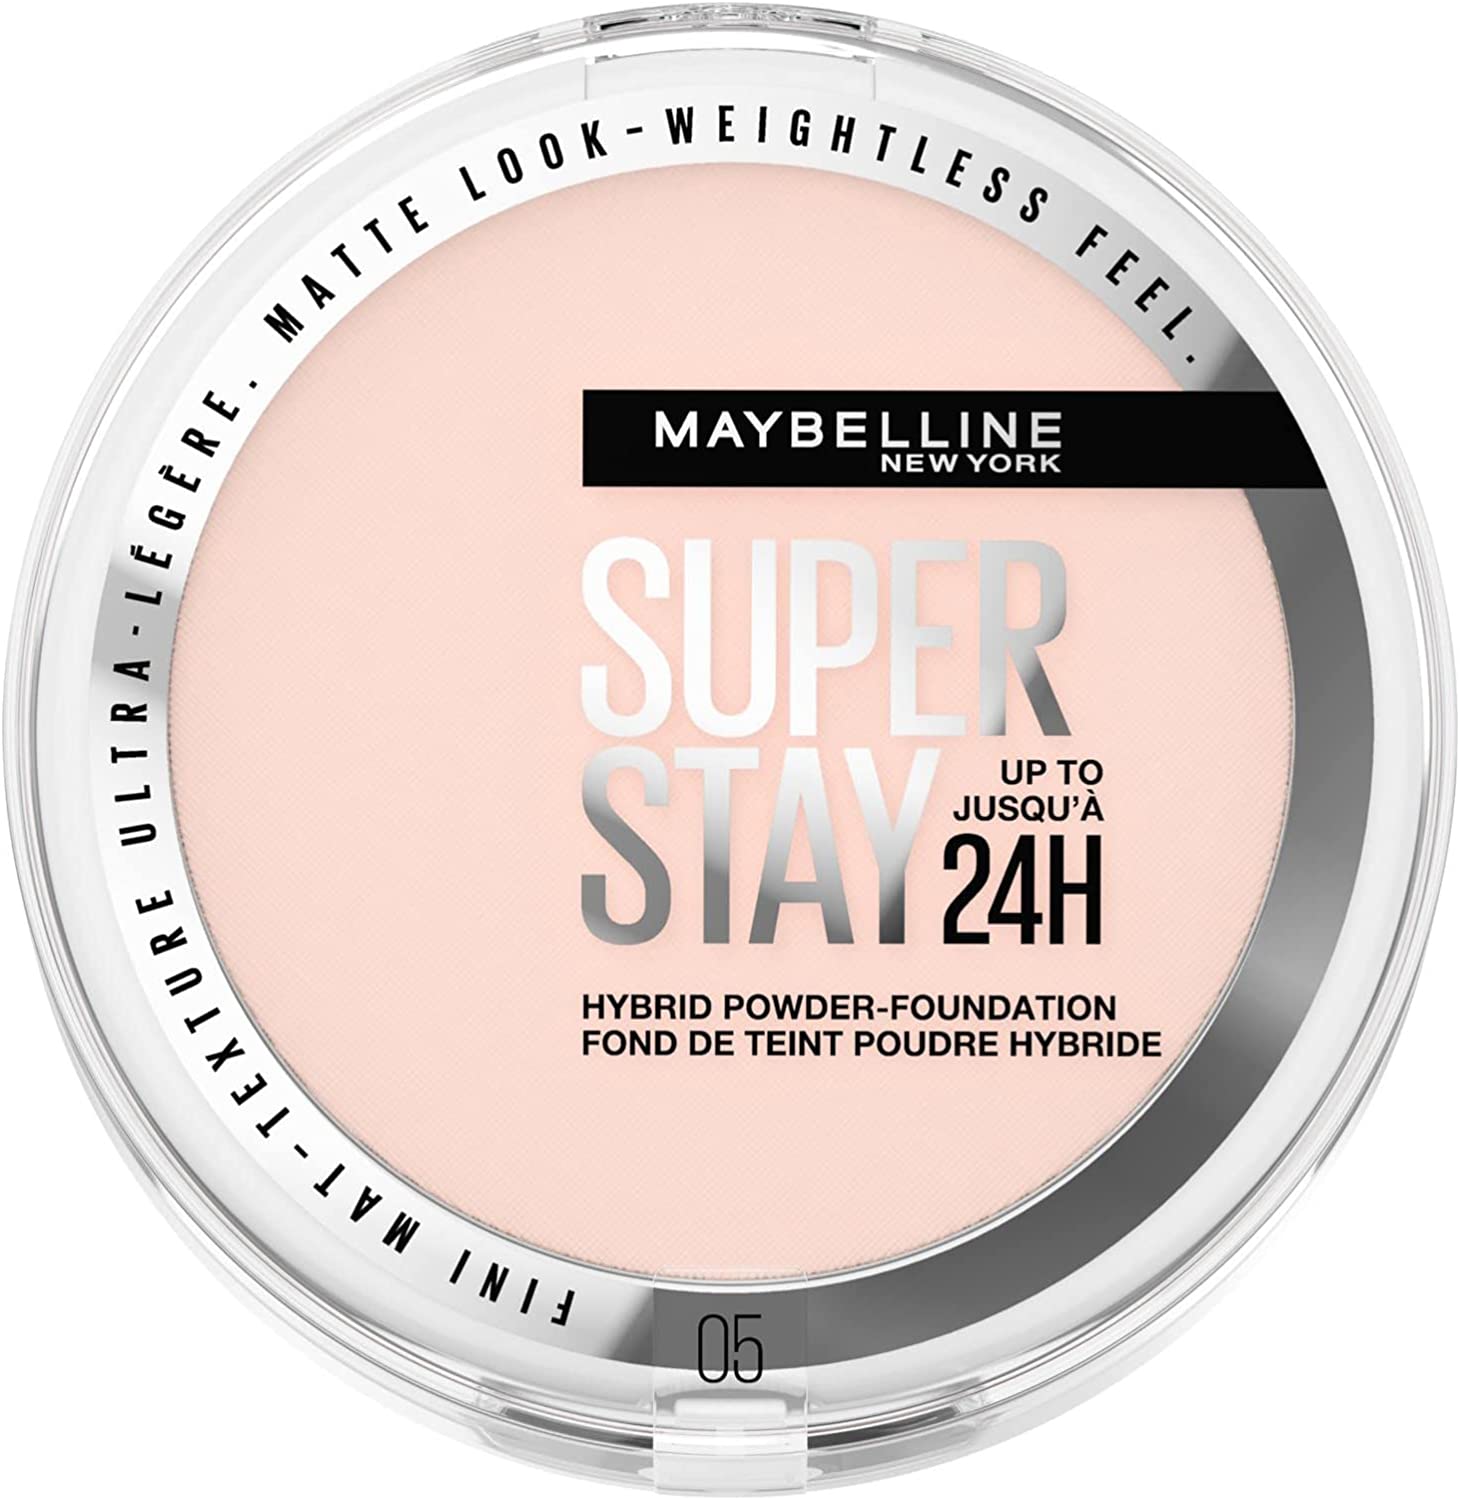 Maybelline Super Stay 24H Hybrid Powder Foundation Colour 05